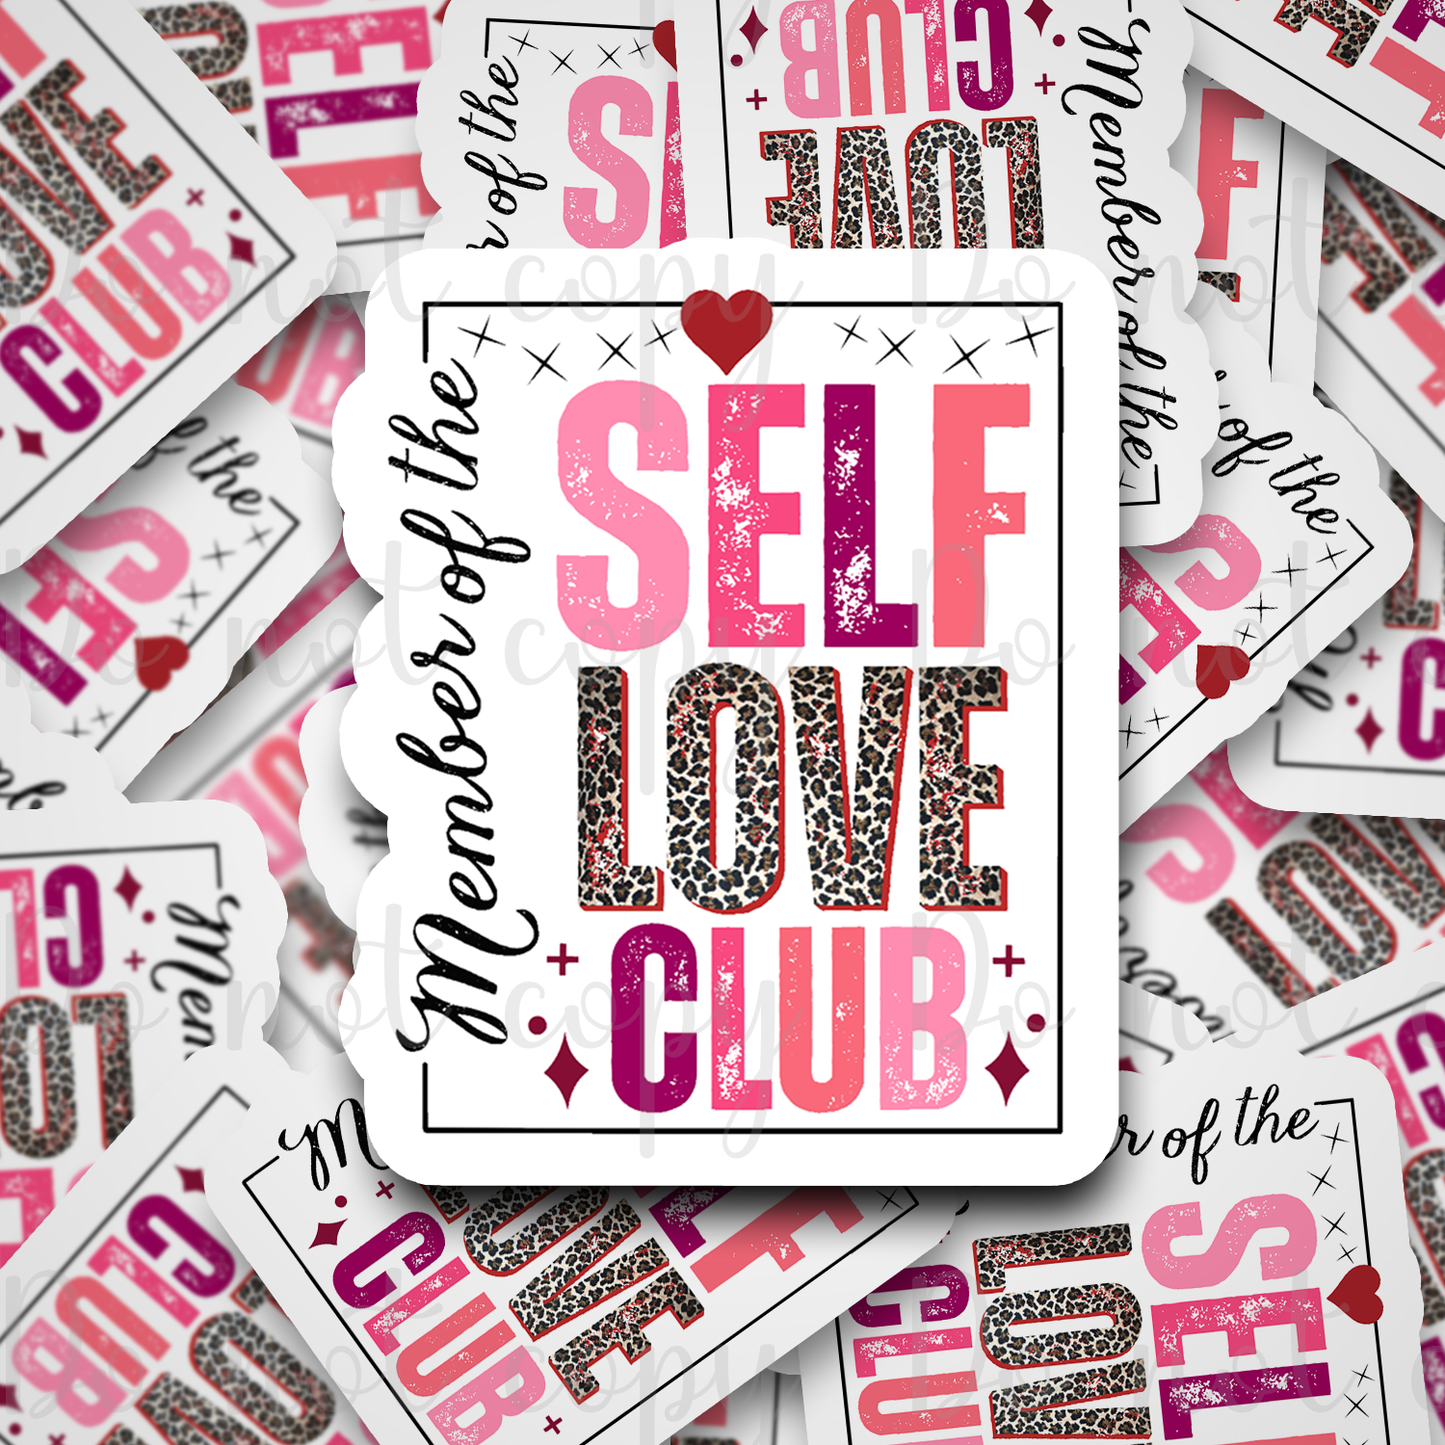 Member of the self love club Die cut sticker 3-5 Business Day TAT